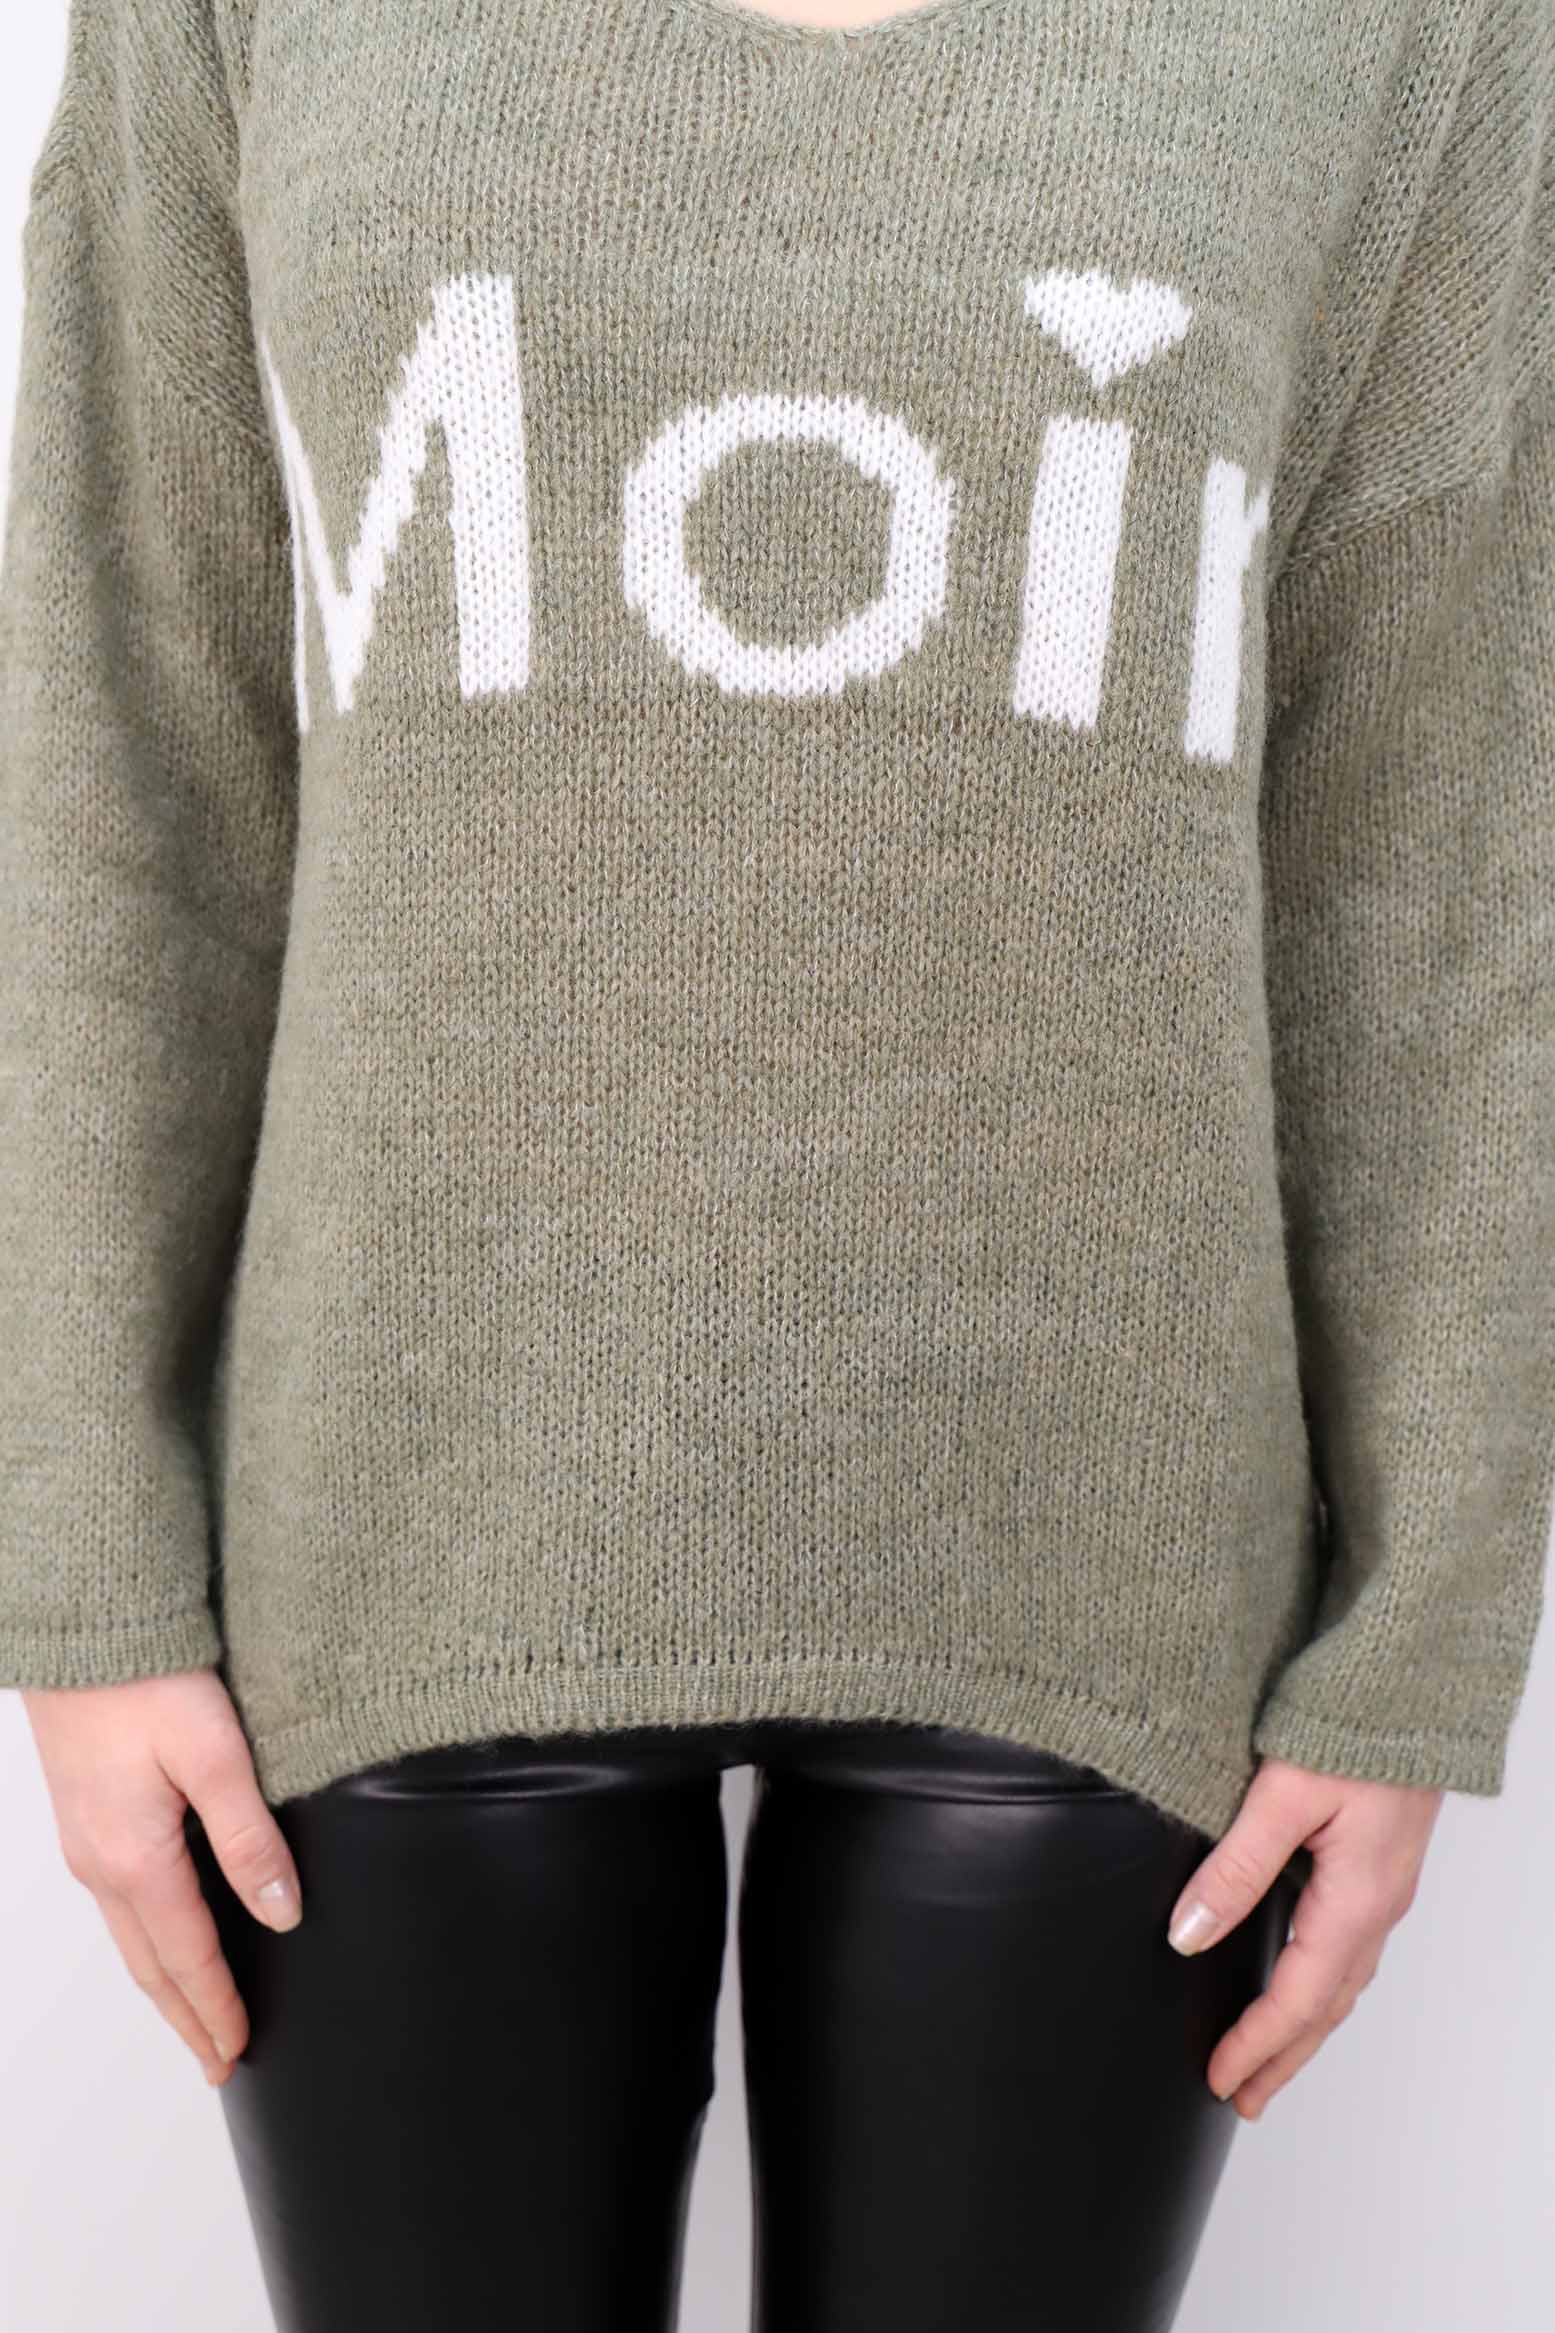 Pullover "Moin" - Khaki